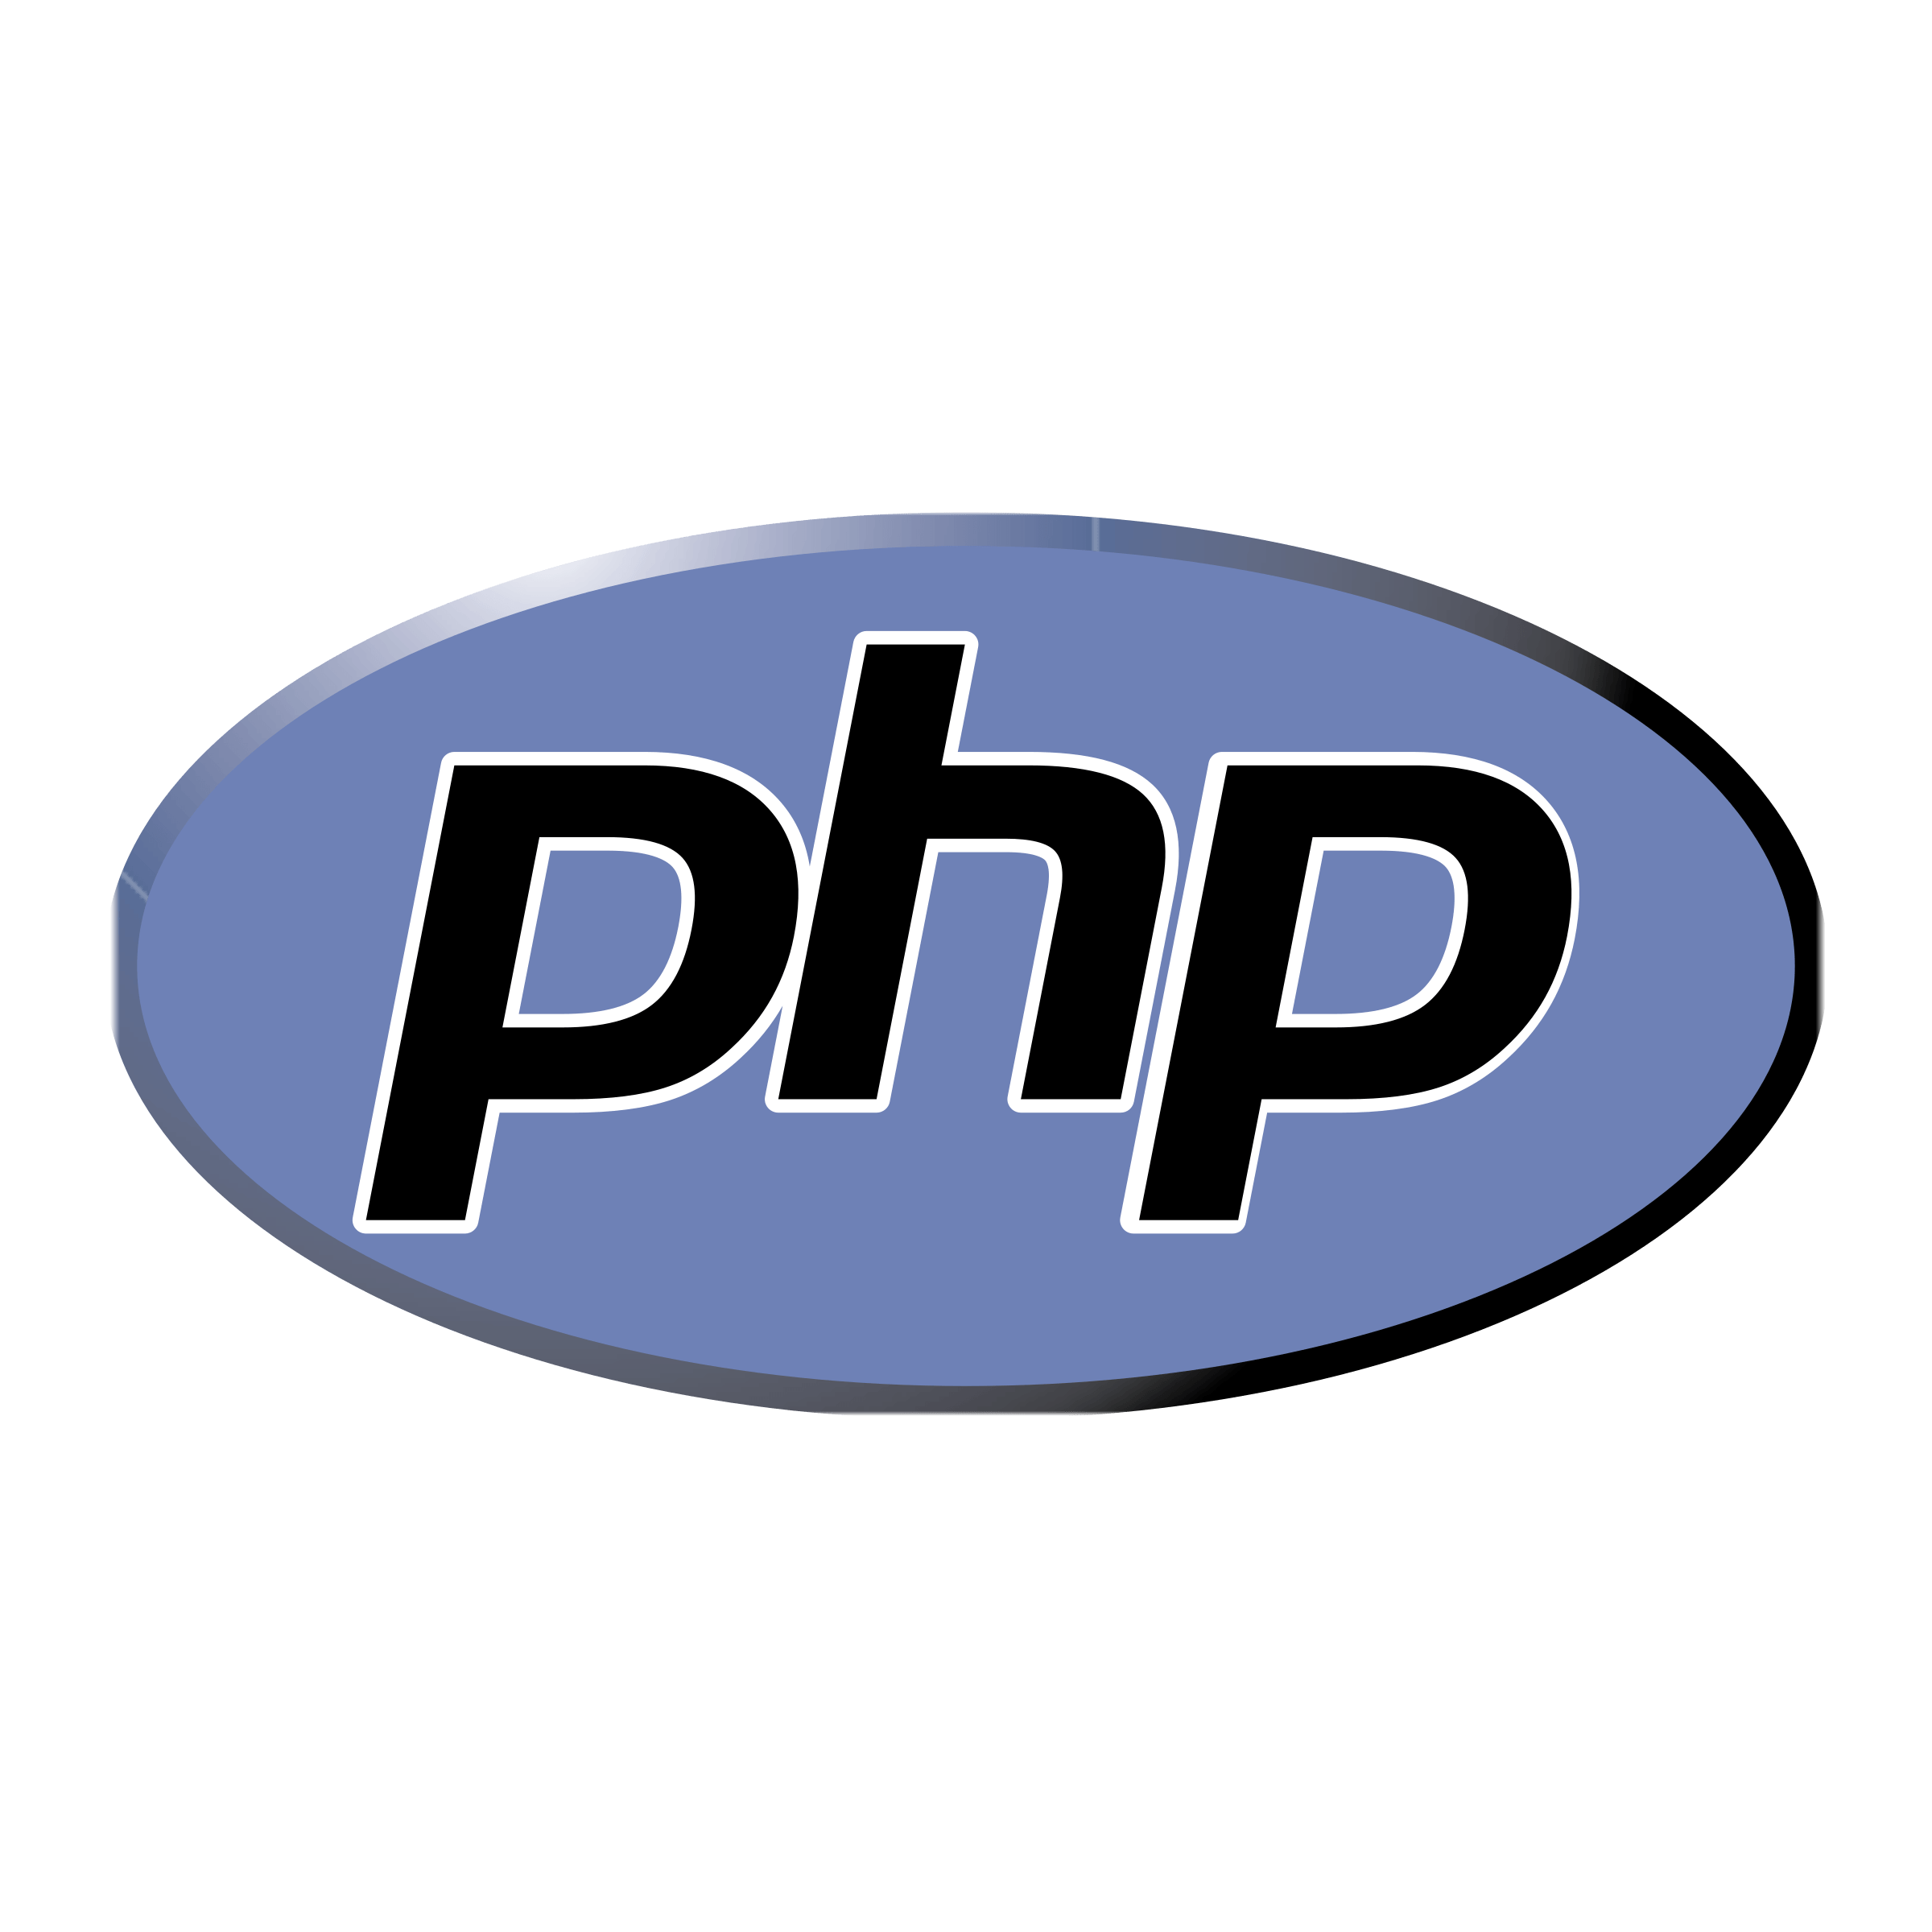 PHP Logo - PHP Logo PNG Transparent & SVG Vector - Freebie Supply